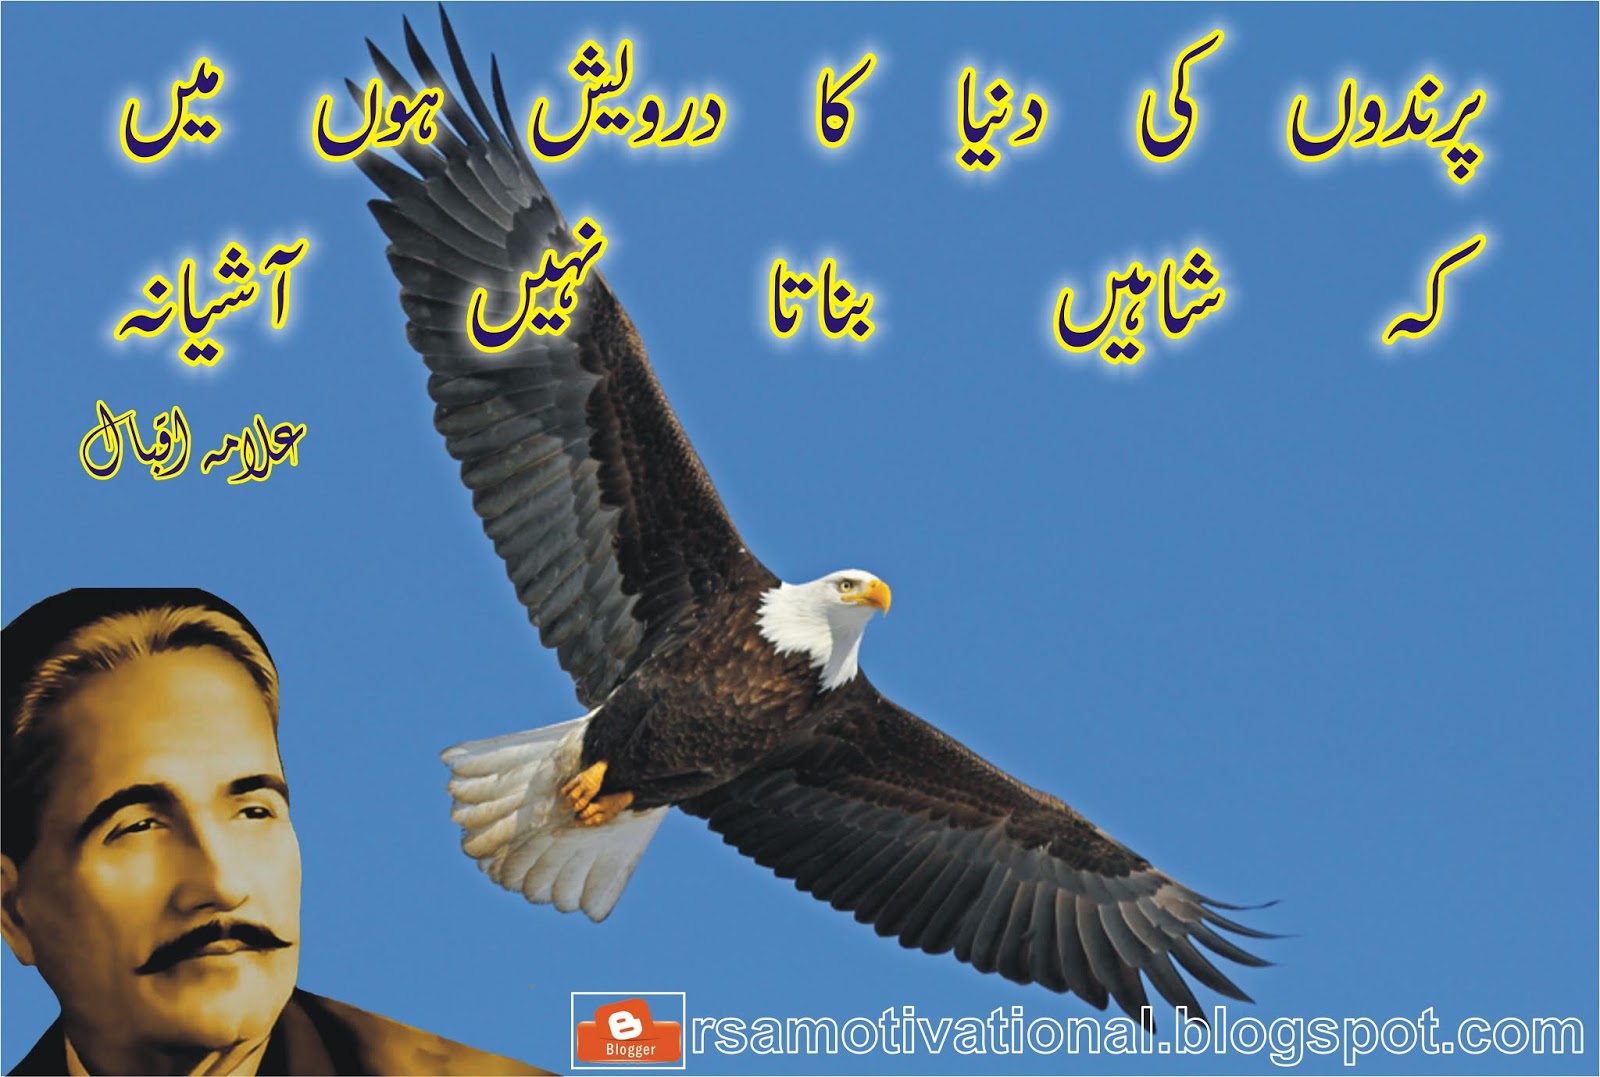 Rsa Motivational Allama Iqbal Poetry Poetry Images Allama Iqbal